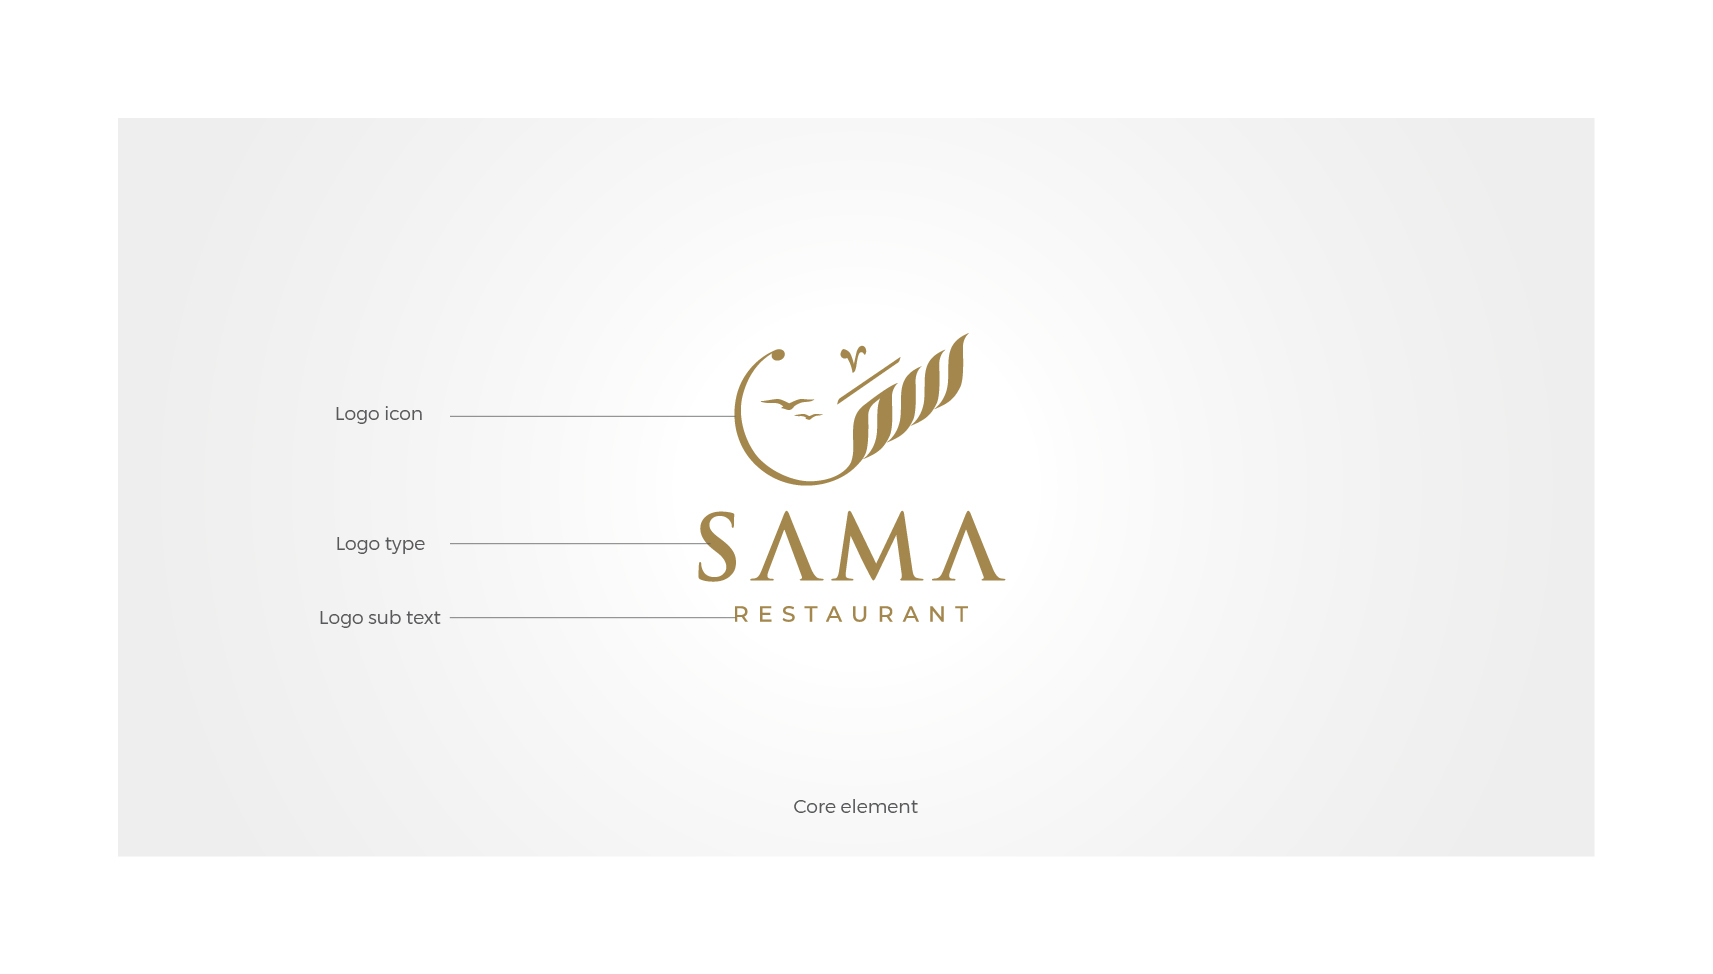 SAMA Brand Guideline9